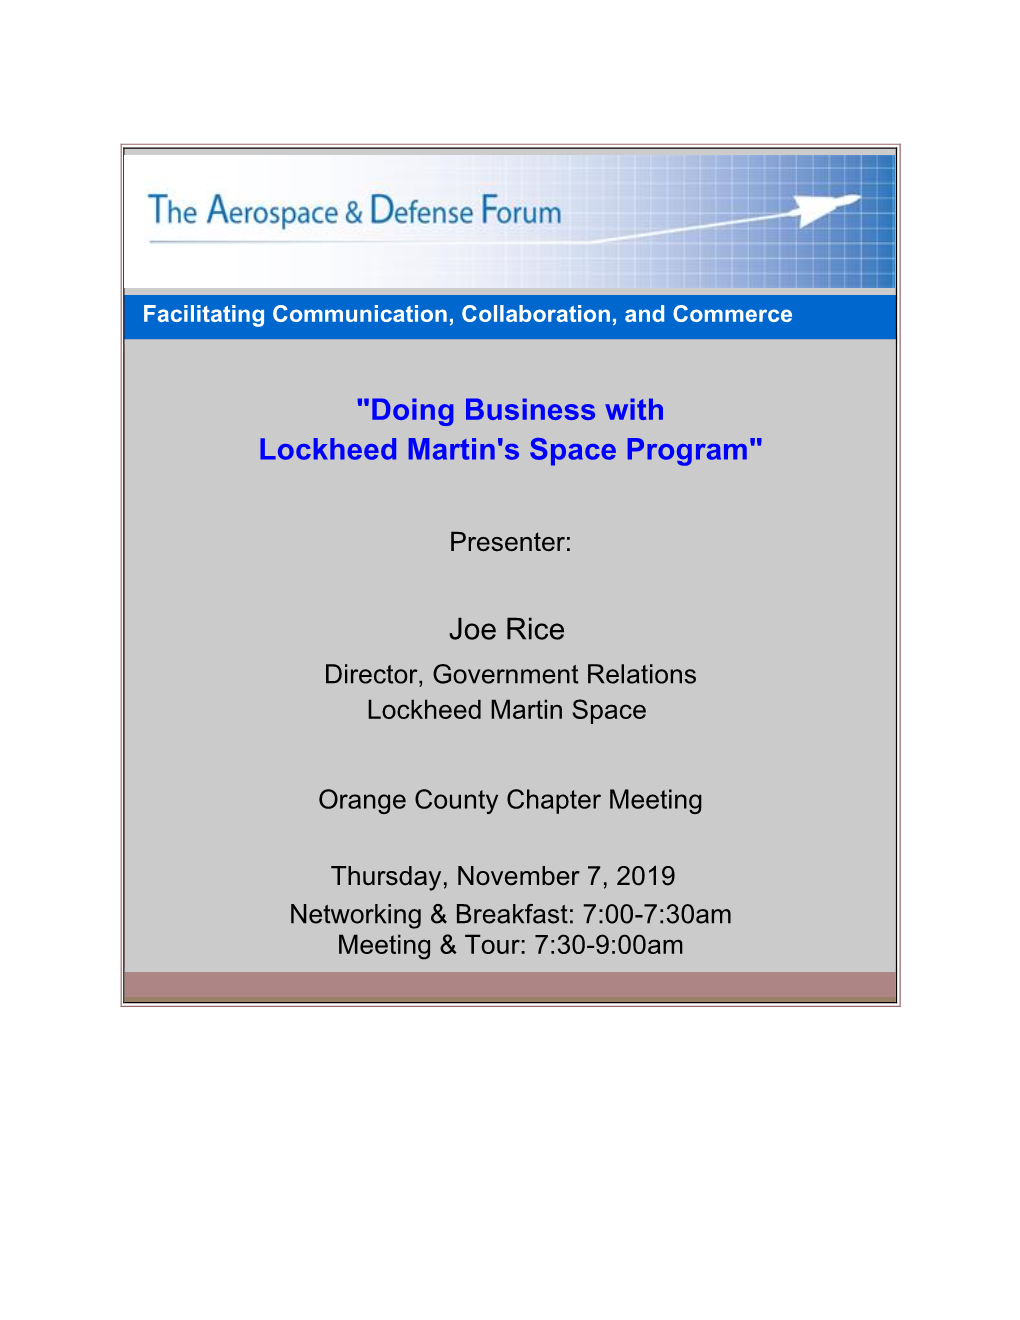 "Doing Business with Lockheed Martin's Space Program" Joe Rice